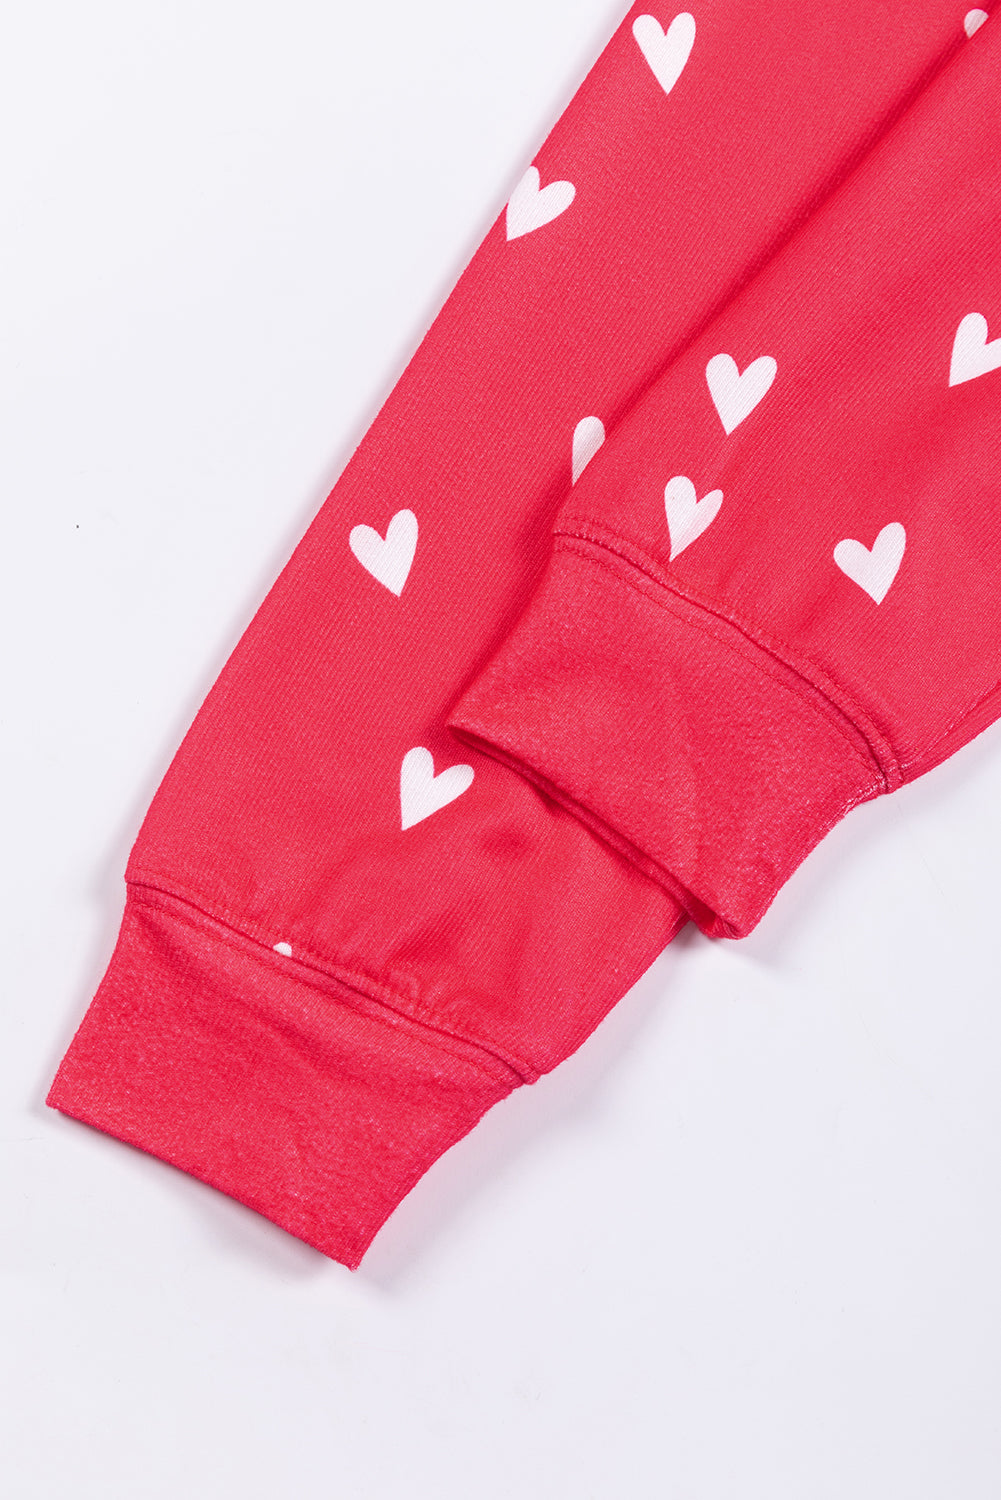 Vatreno crveni komplet hlača s printom srca za Valentinovo